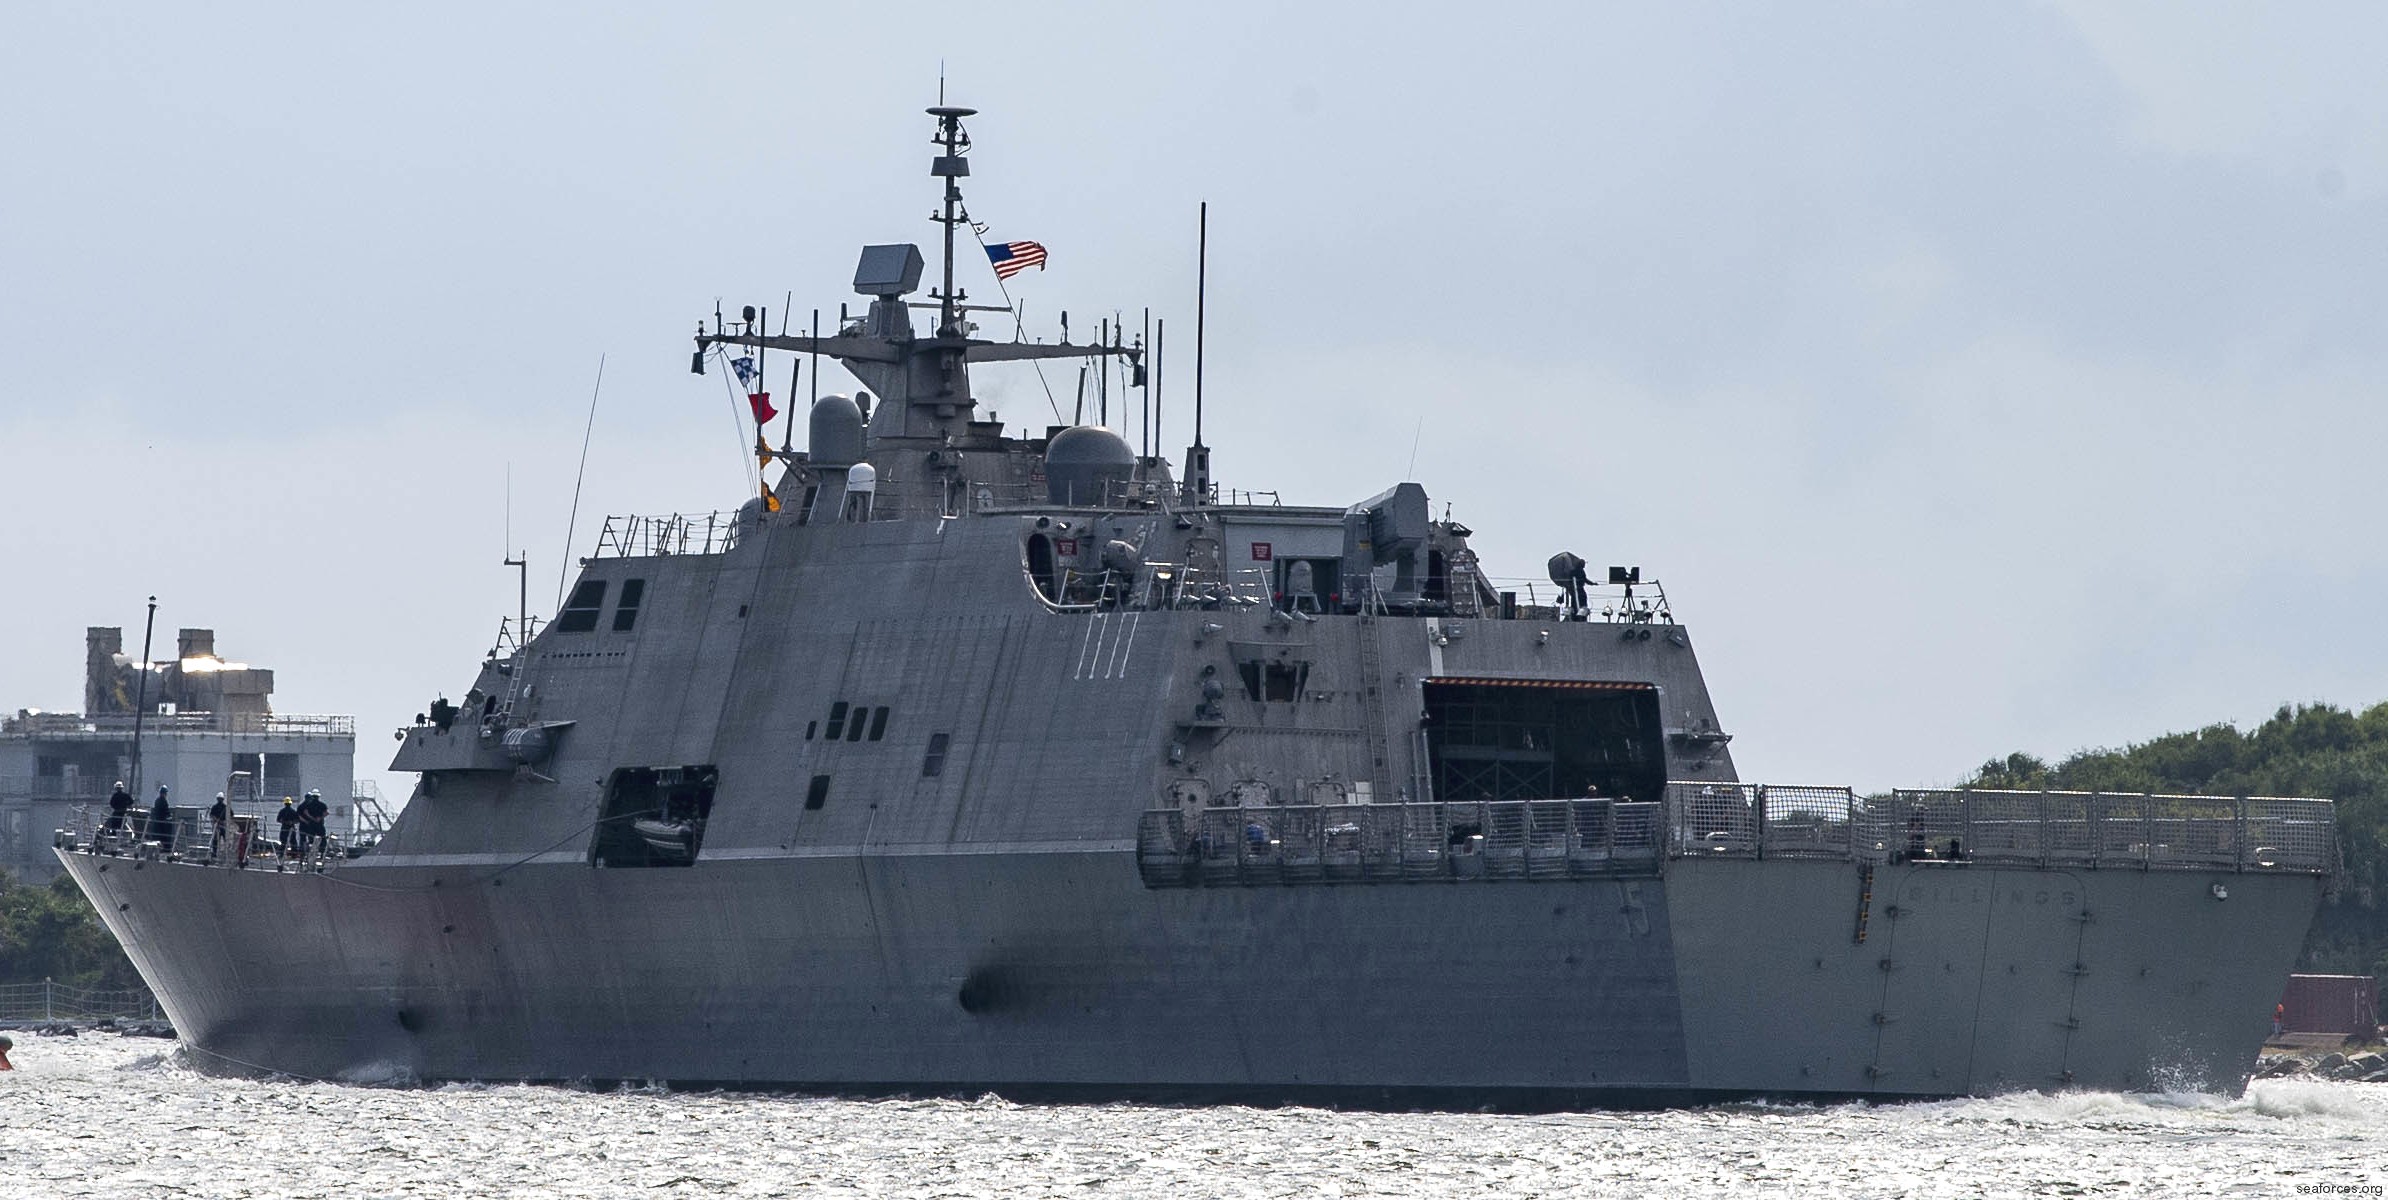 lcs-15 uss billings freedom class littoral combat ship us navy 28 mayport florida